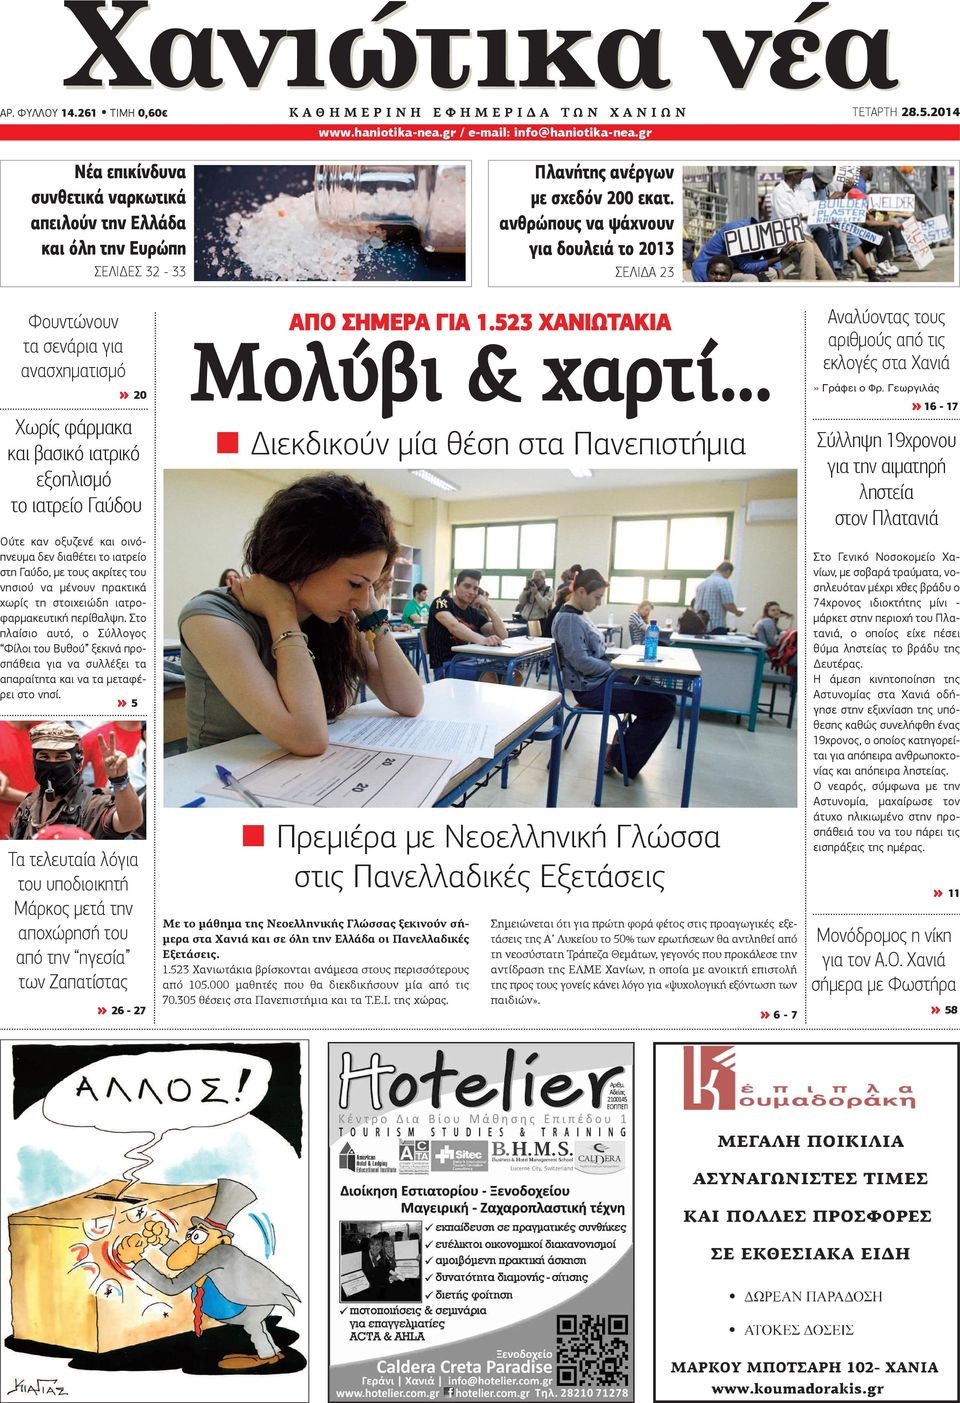 gr / e-mail: info@haniotika-nea.gr Πλανήτης ανέργων με σχεδόν 200 εκατ. ανθρώπους να ψάχνουν για δουλειά το 2013 ΣΕΛΙΔΑ 23 ΤΕΤΑΡΤΗ 28.5.